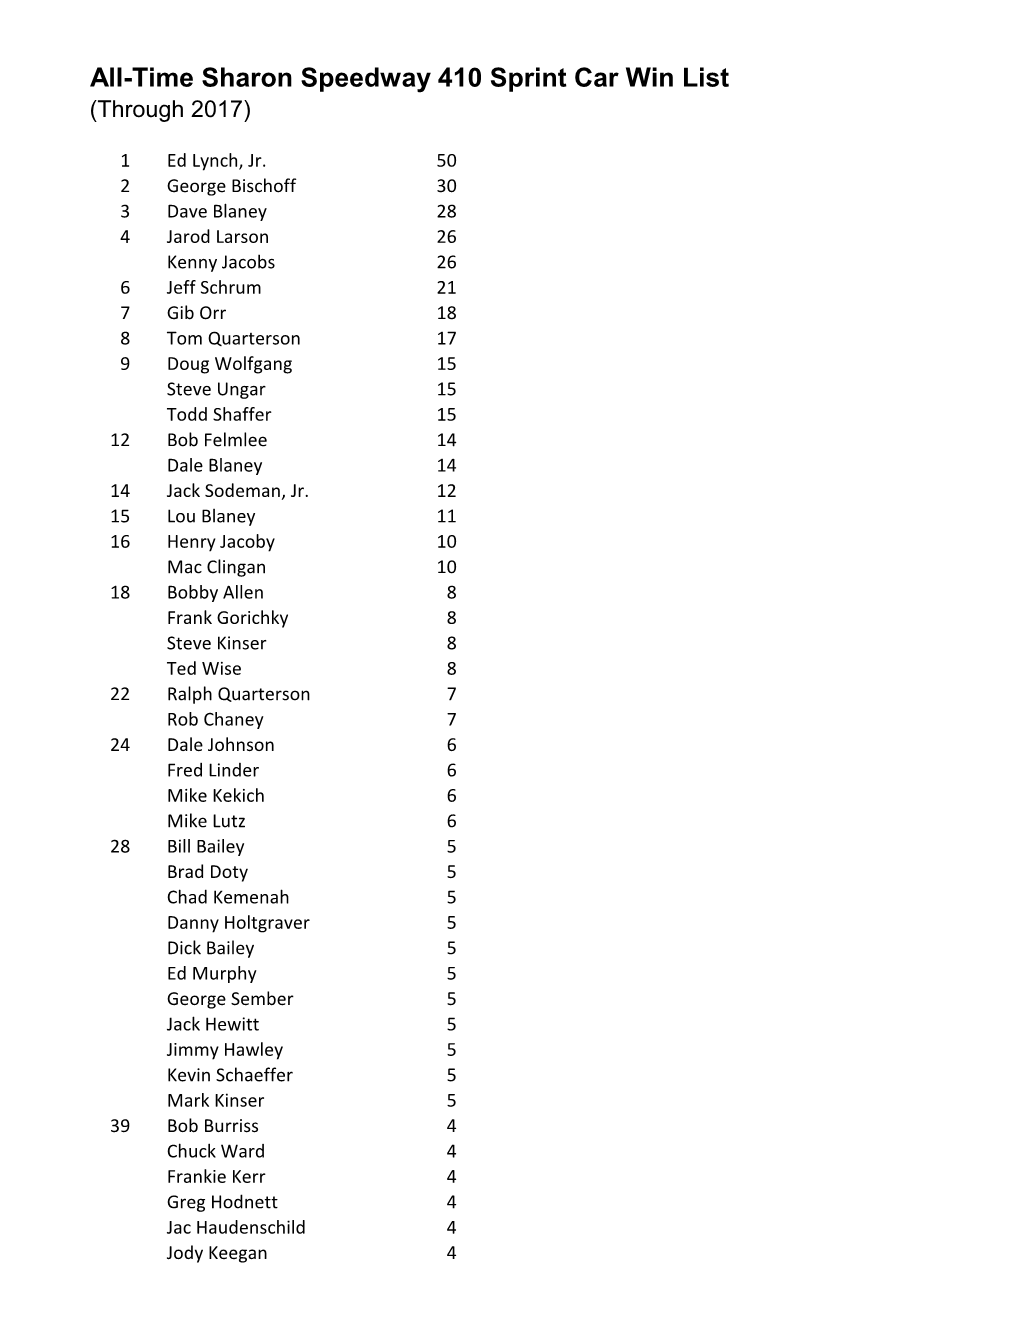 All-Time Sharon Speedway 410 Sprint Car Win List (Through 2017)